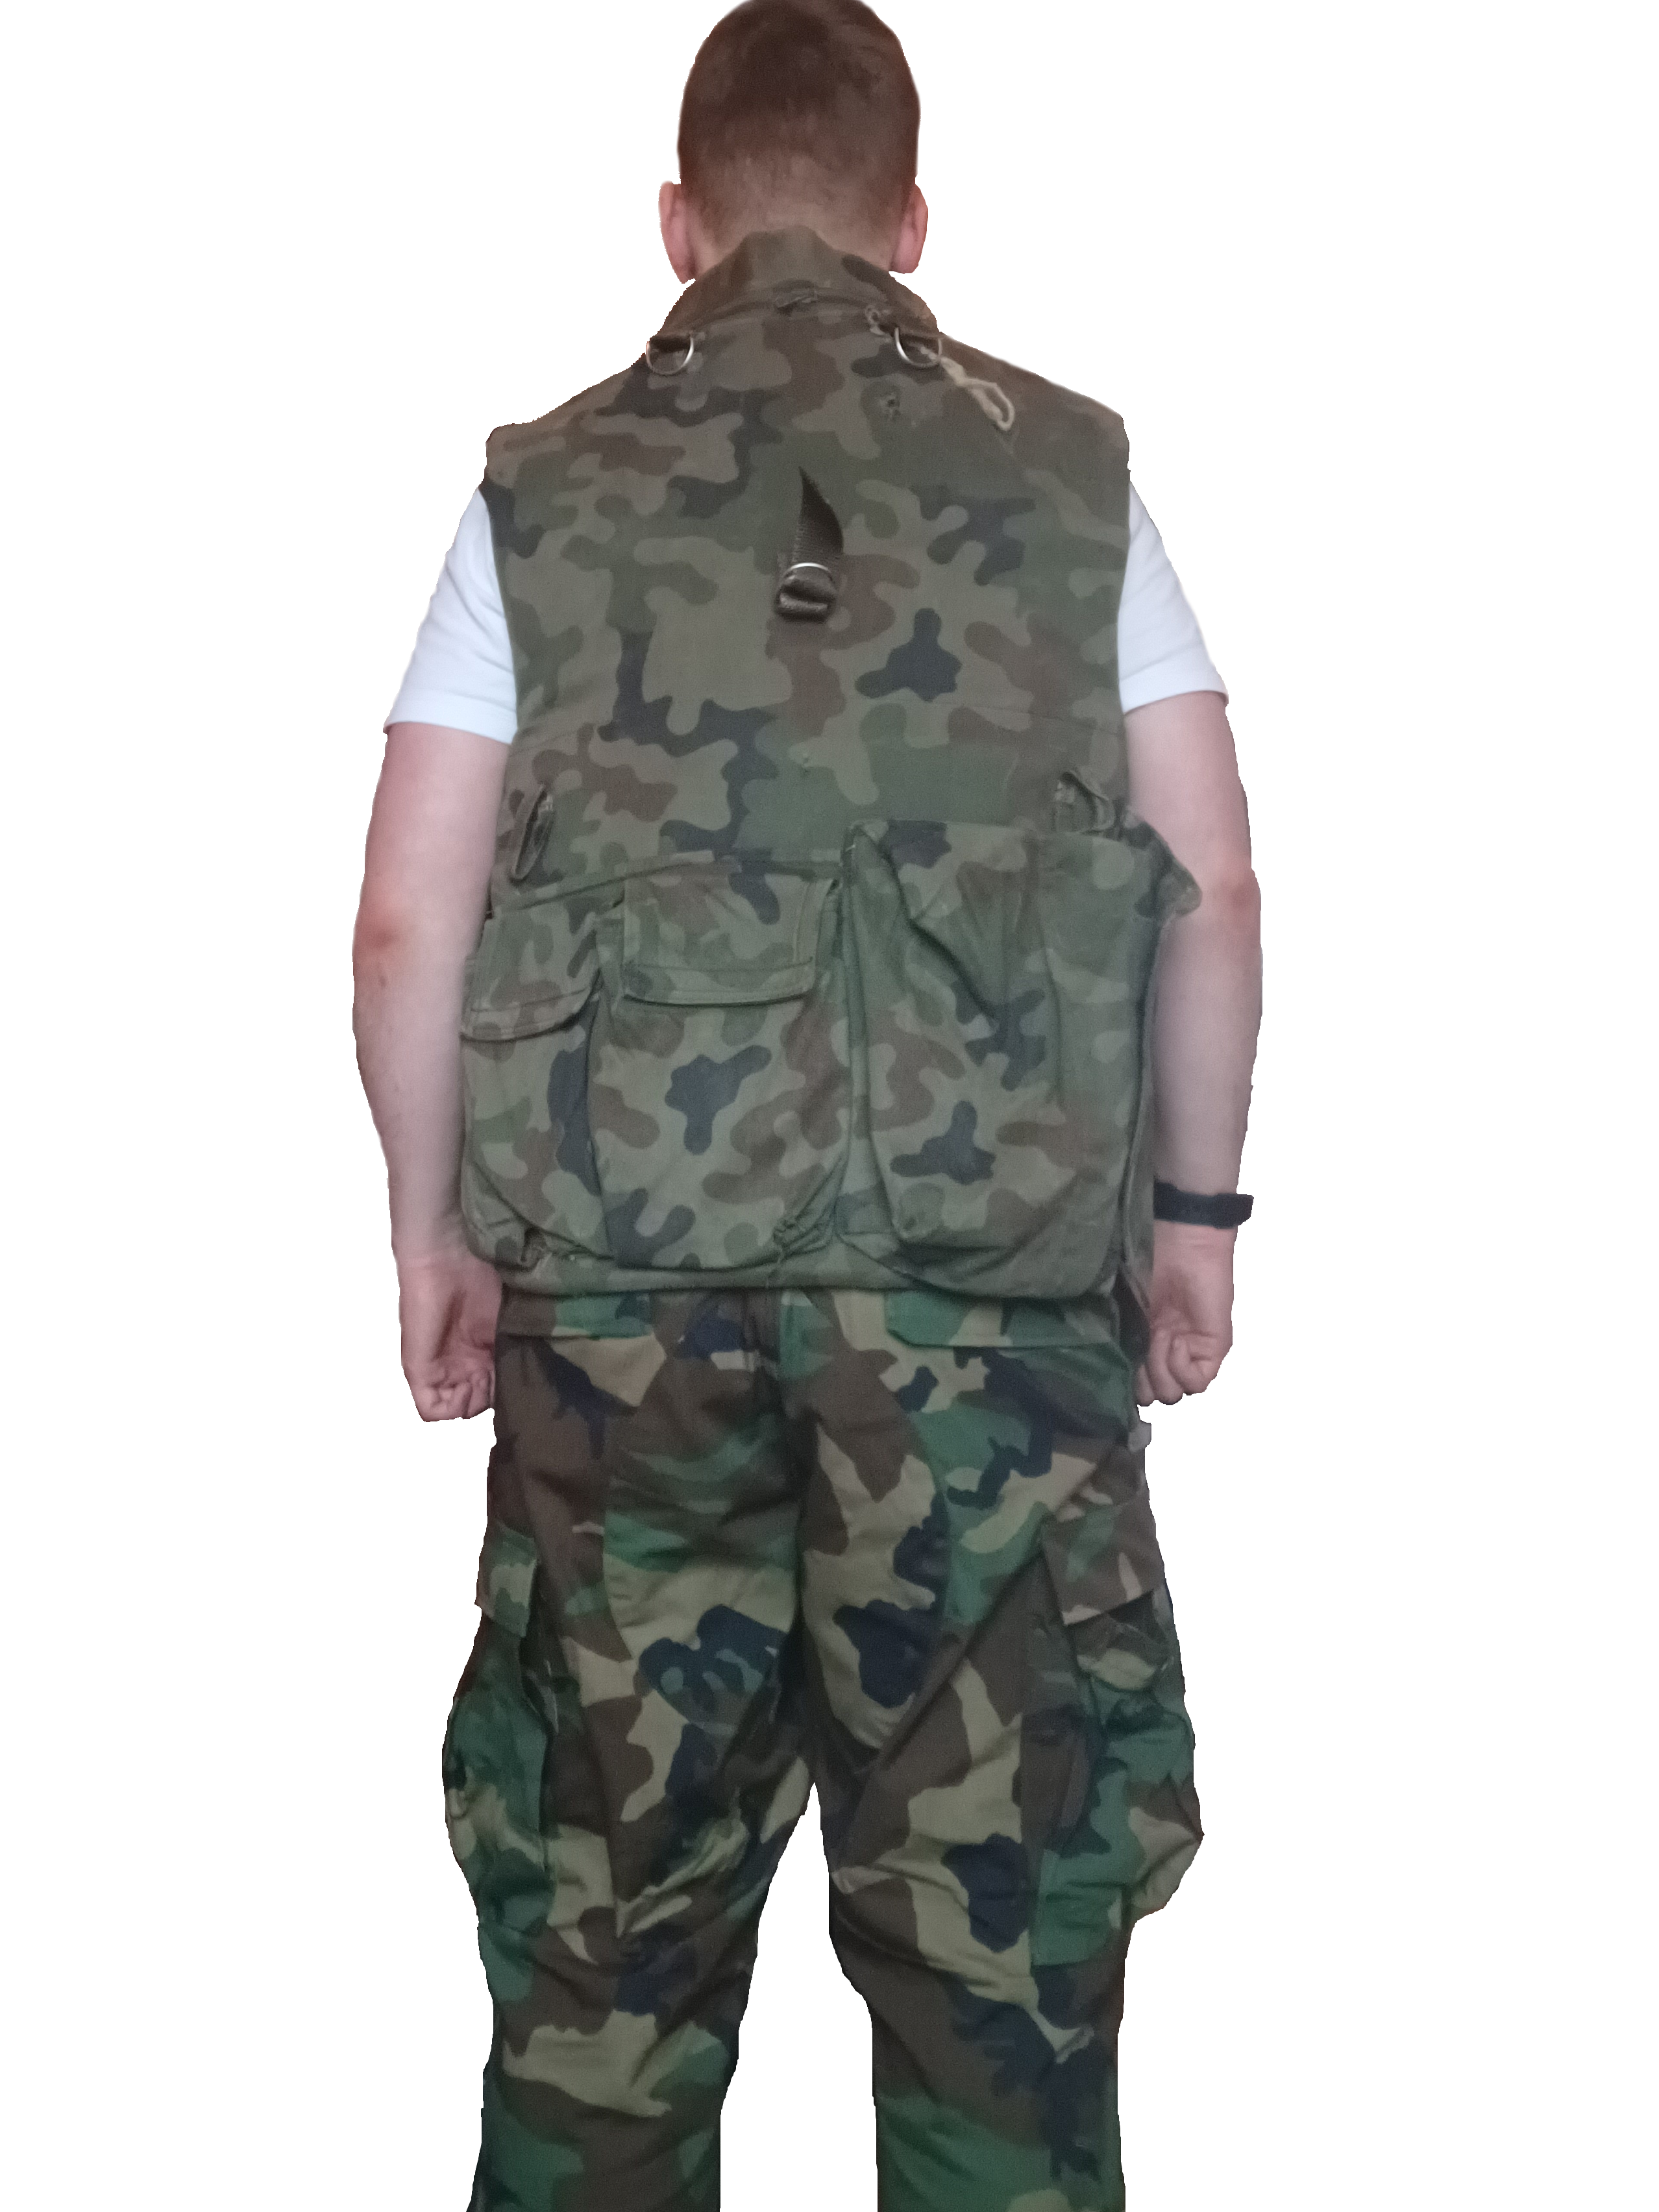 1990s Polish body armor vest - OCHRA Ochra-akm-back